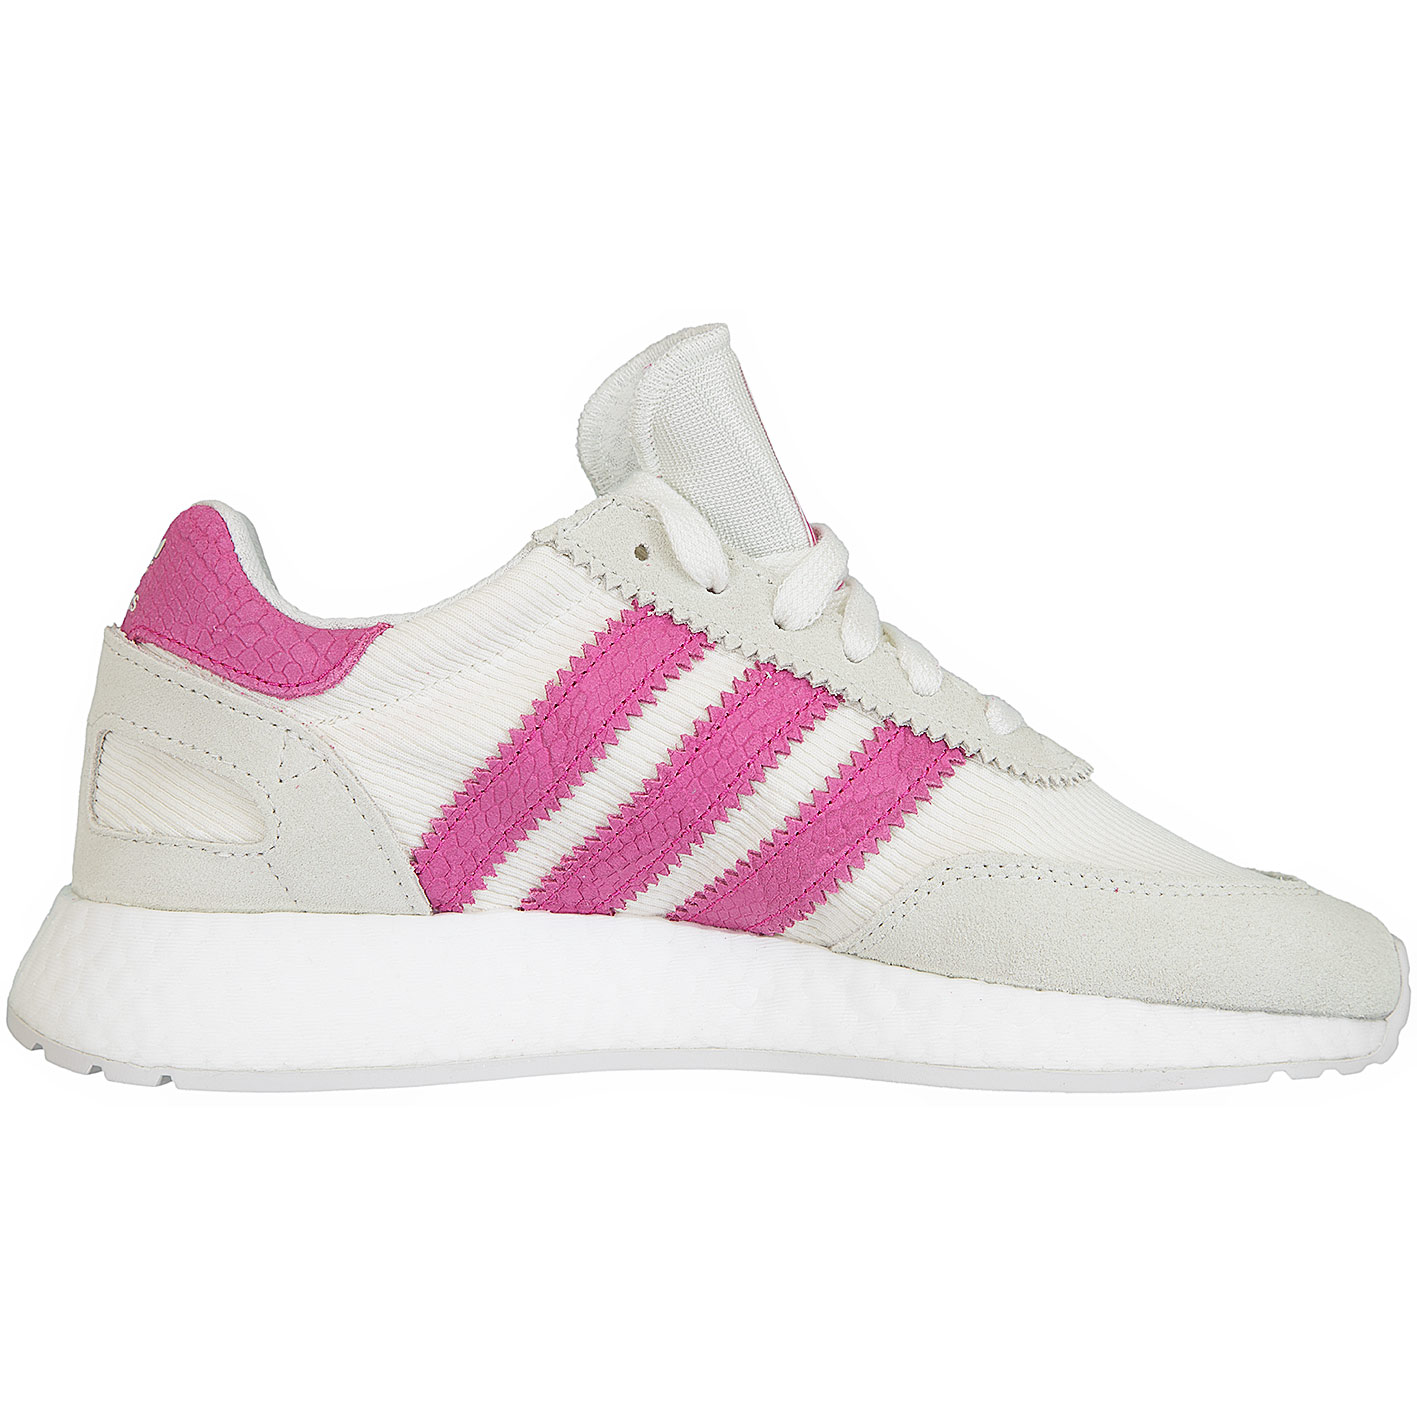 ☆ Adidas Originals Damen Sneaker I-5923 weiß/pink - hier bestellen!